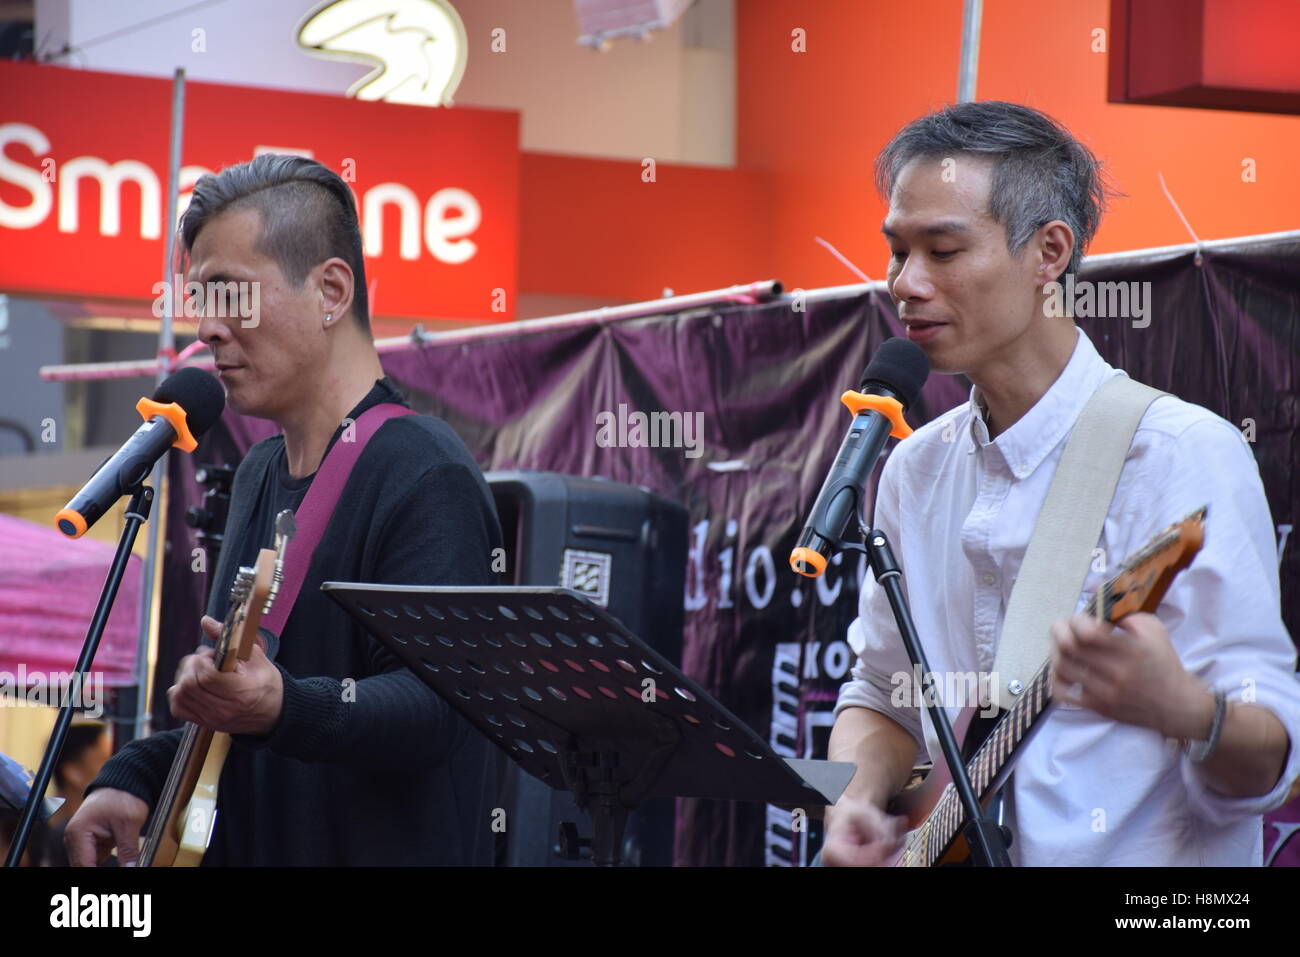 Hong Kong, China - Asian guitarist and bassist playing music and singing on the street Stock Photo